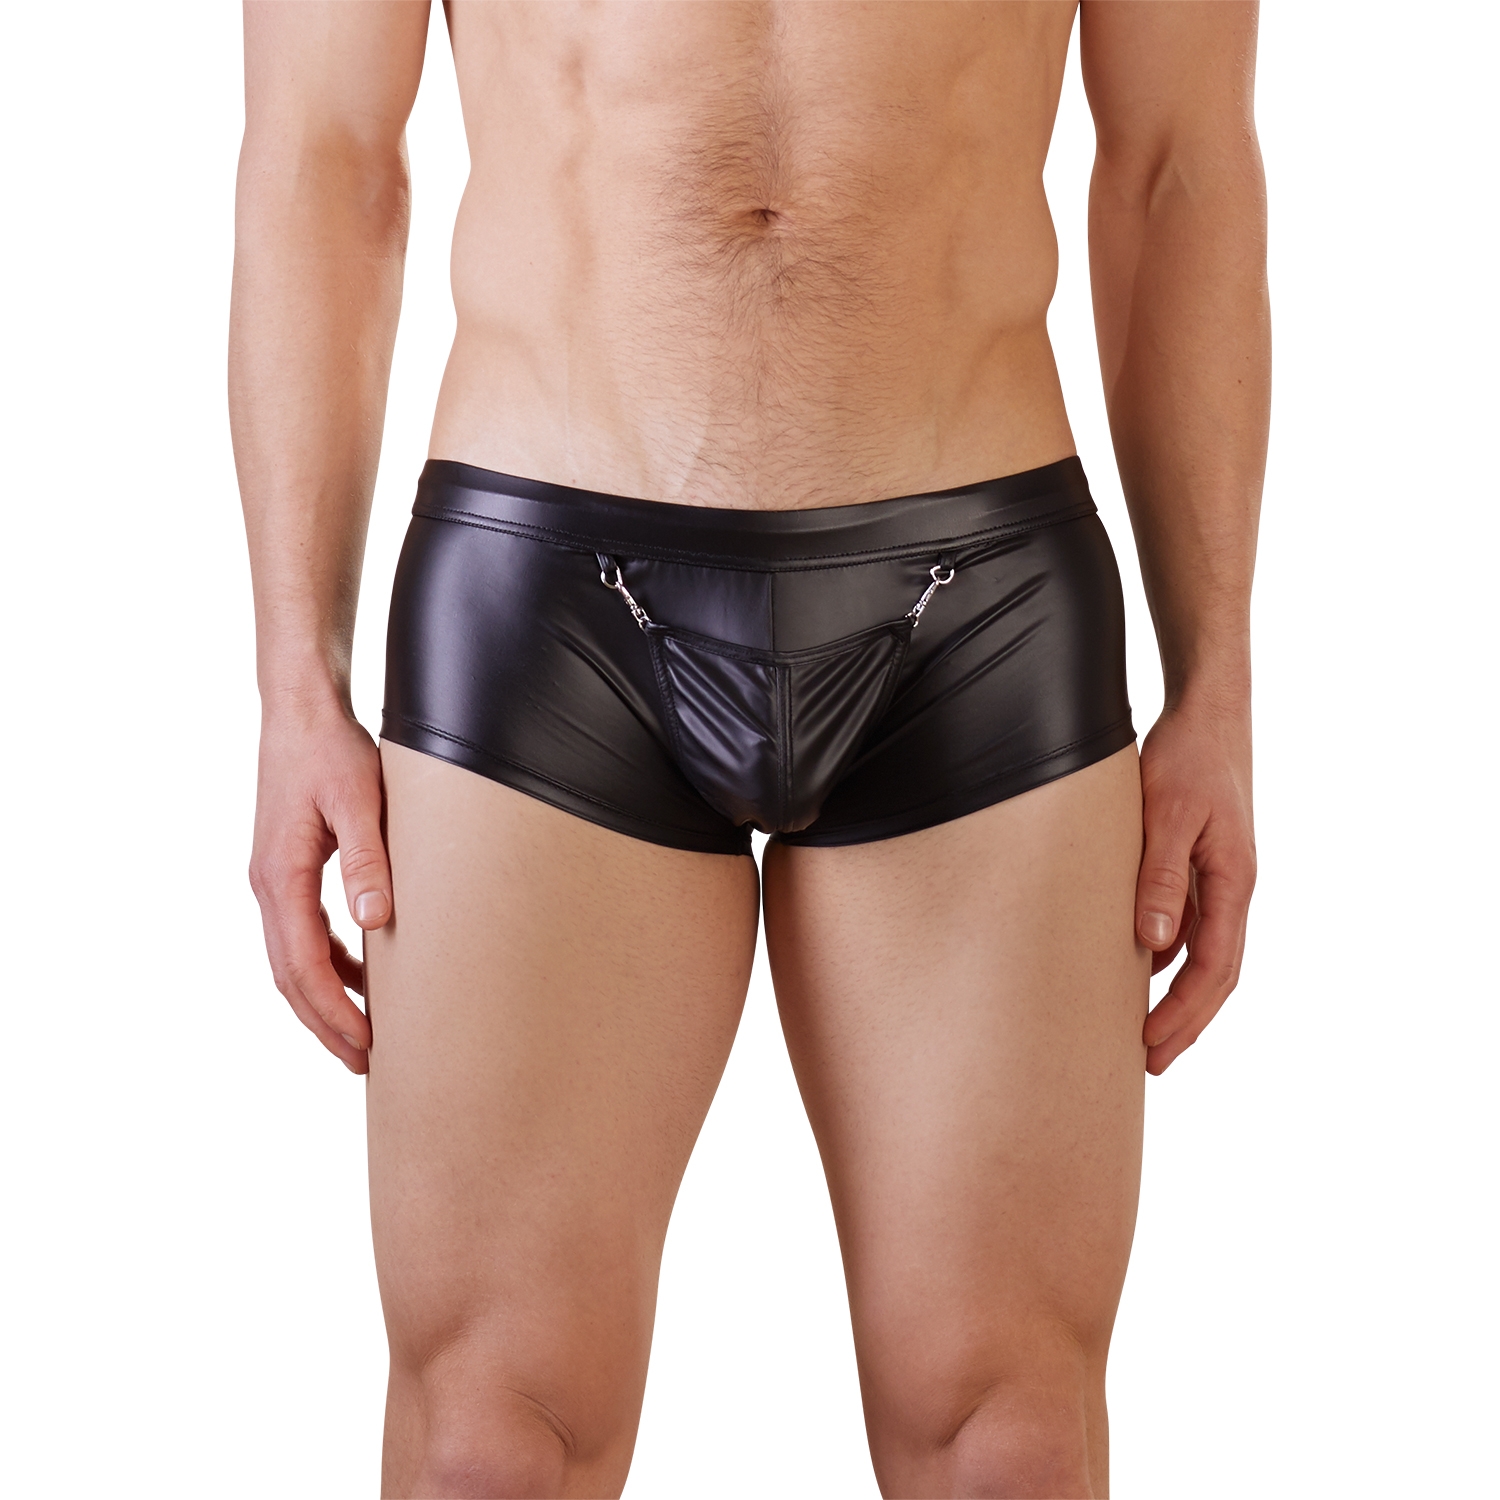 NEK Wetlook Boxer Shorts - Black - M